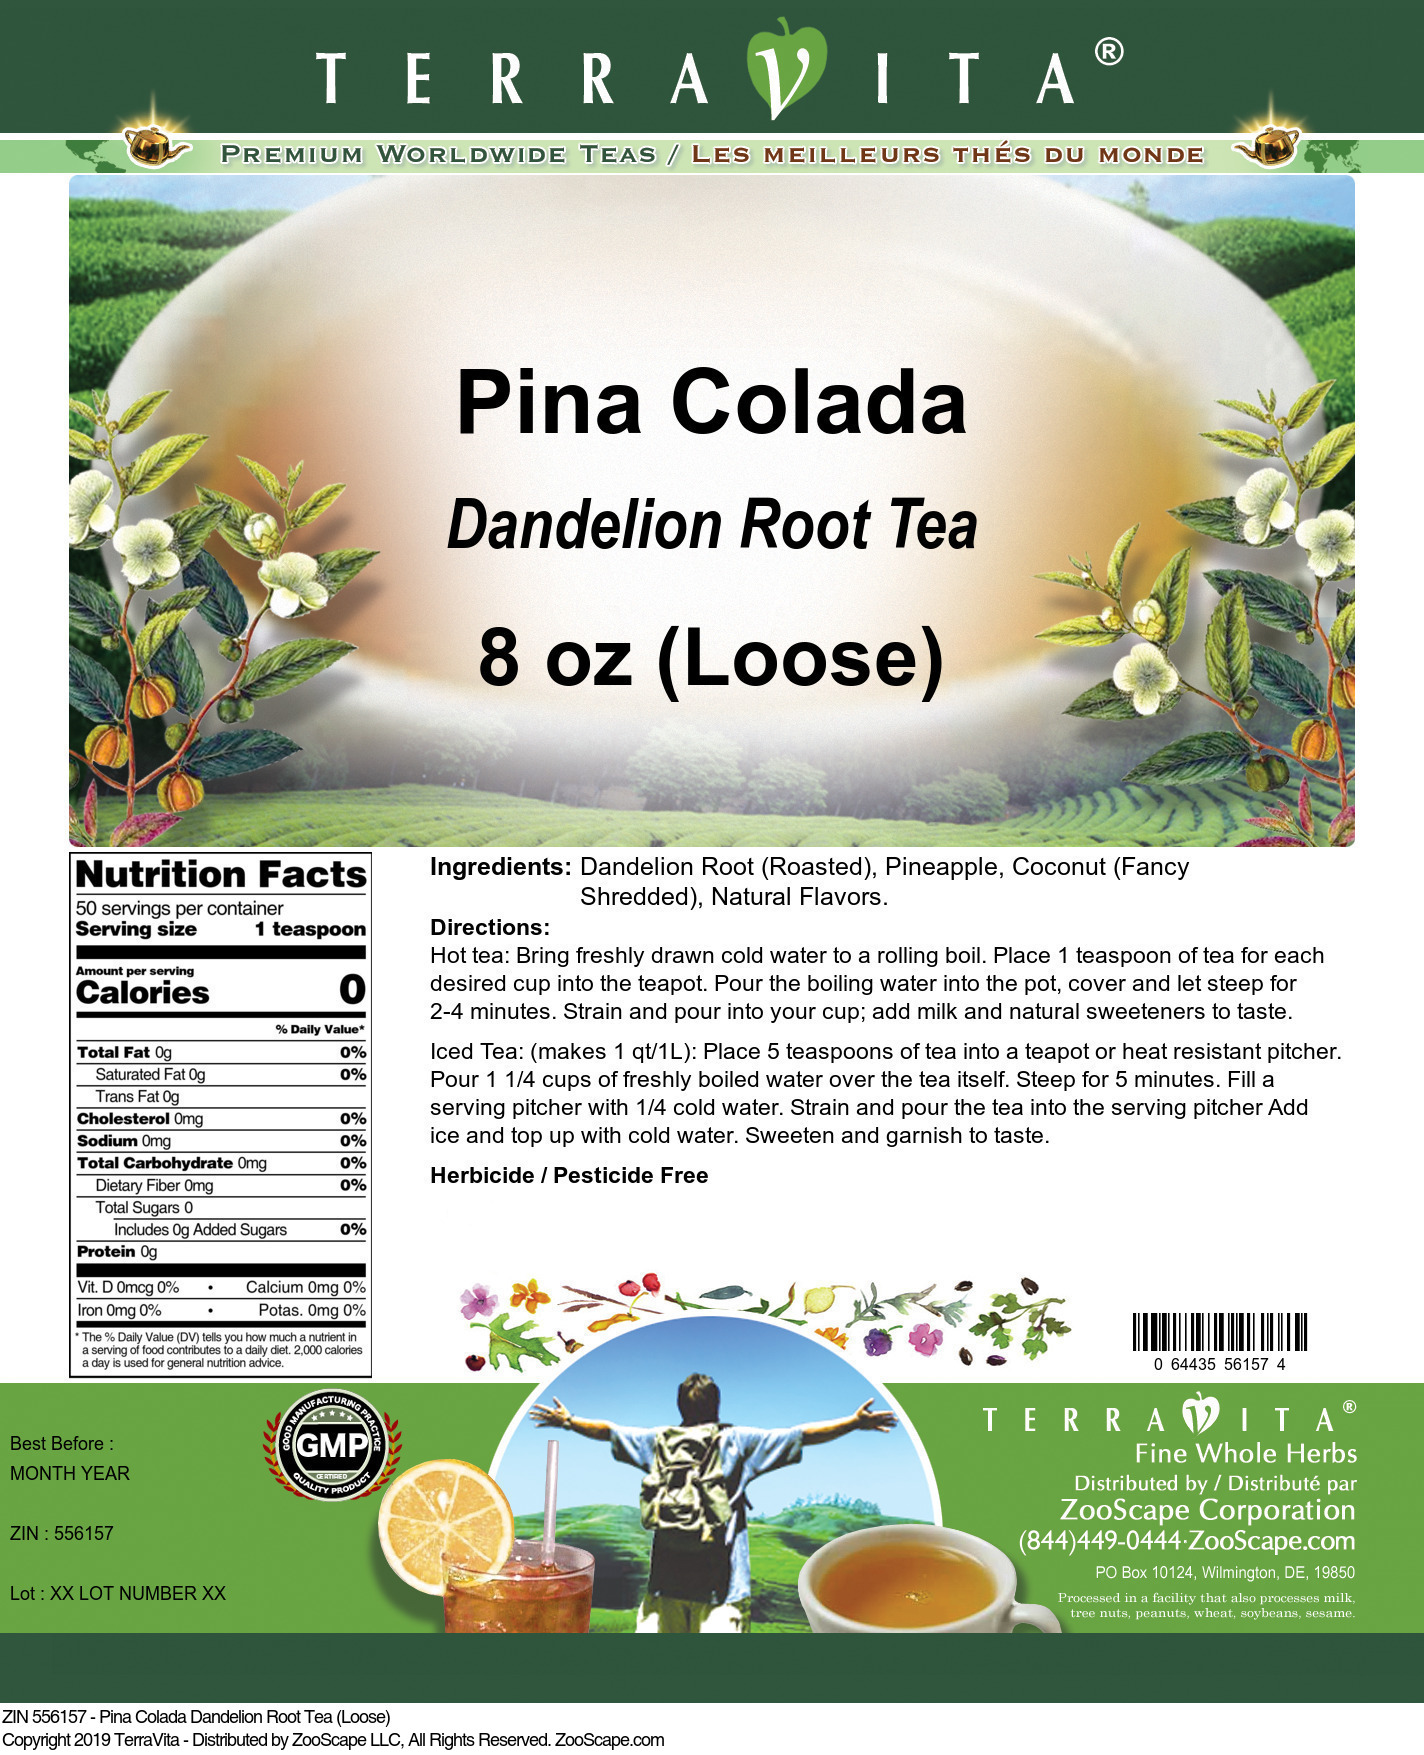 Pina Colada Dandelion Root Tea (Loose) - Label